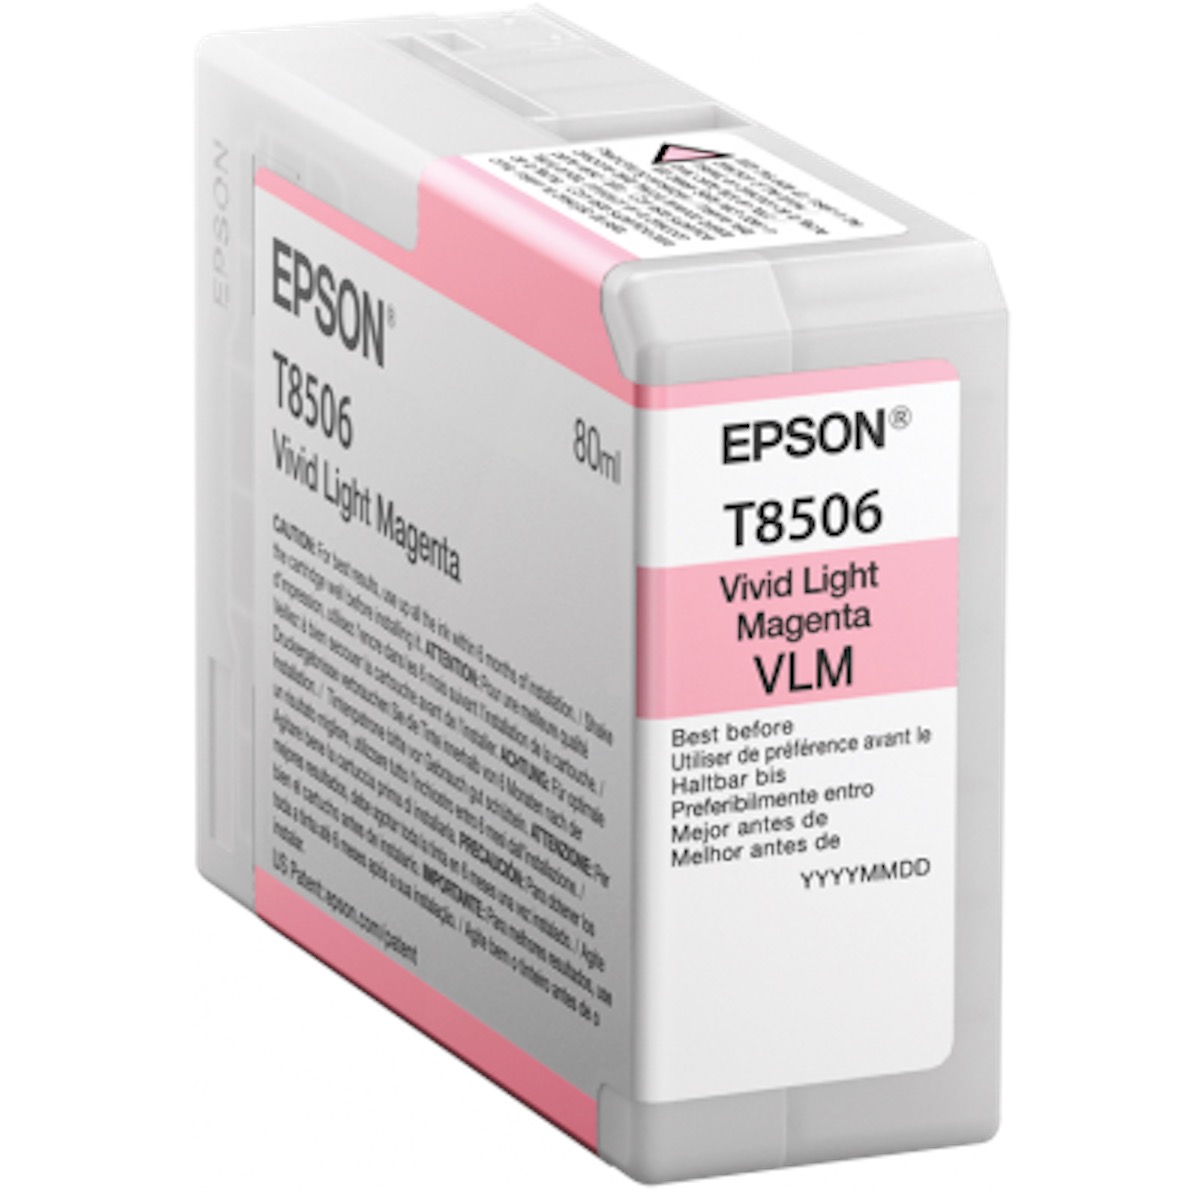 Epson T8506 vivid light magenta Tinte